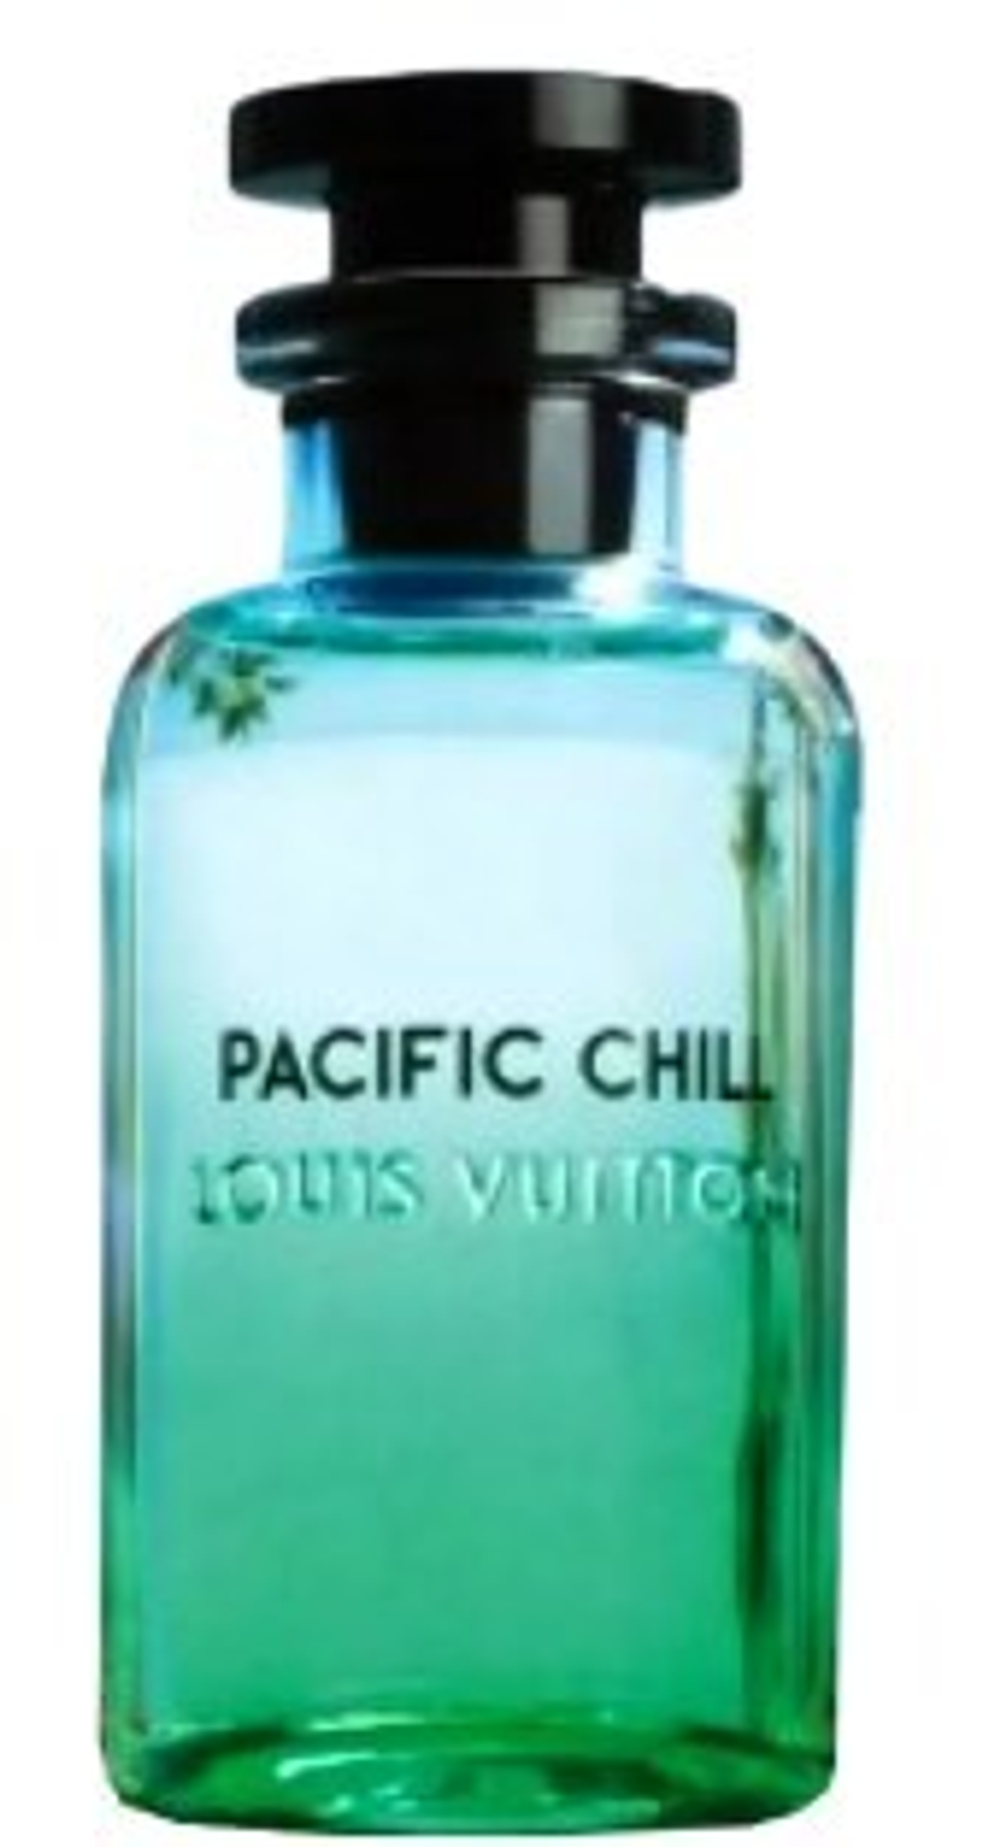 Louis Vuitton Pacific Chill EDP - купить по выгодной цене